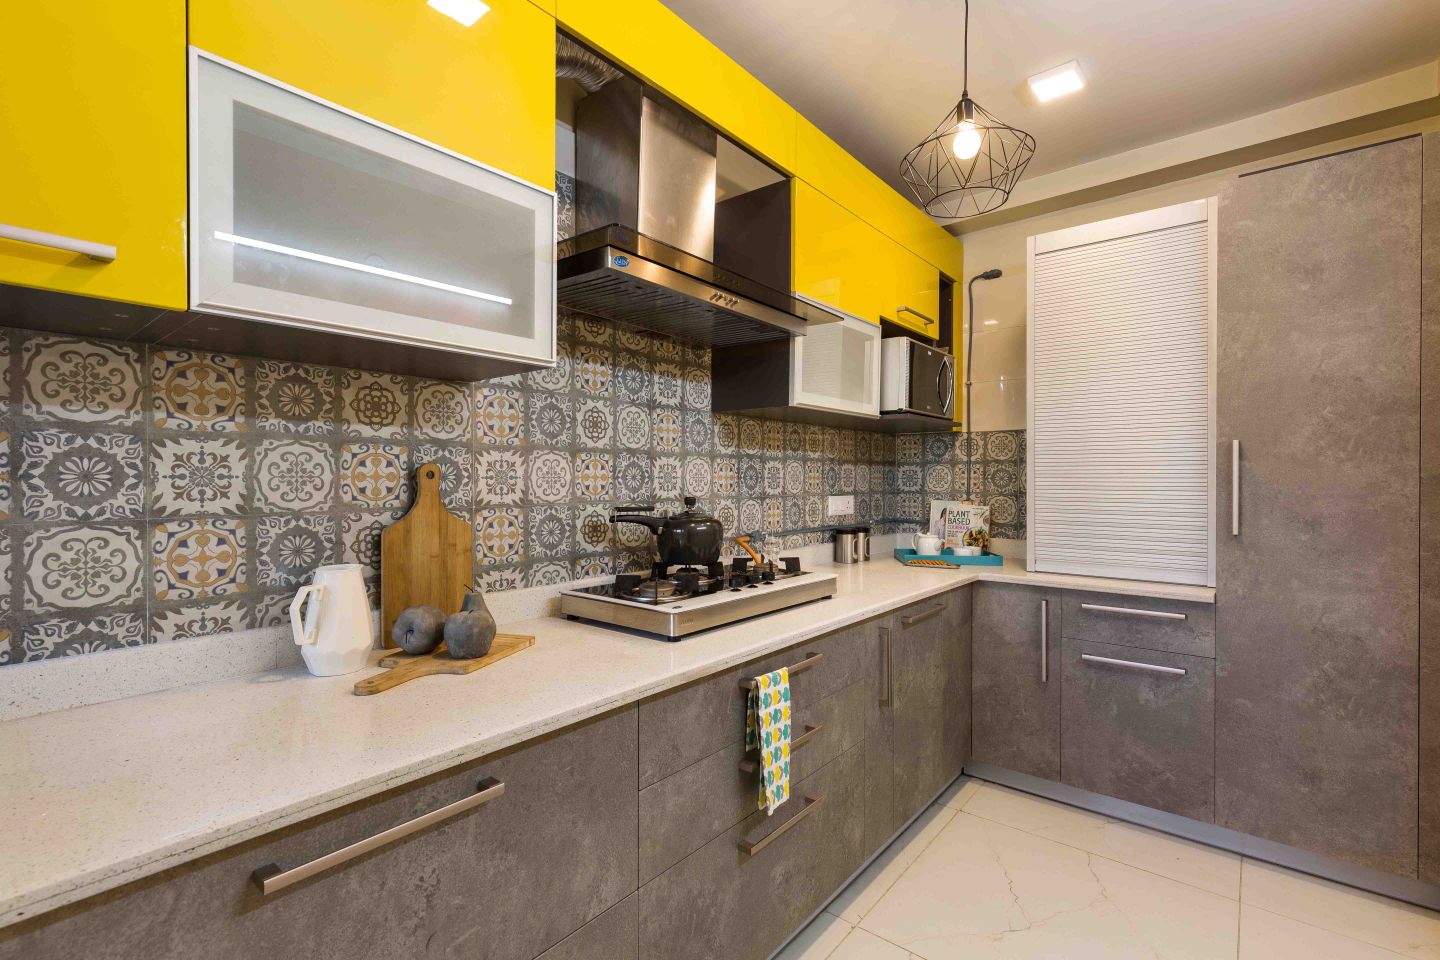 Modular Grey And Yellow Kitchen Design With Moroccan Backsplash - Livspace